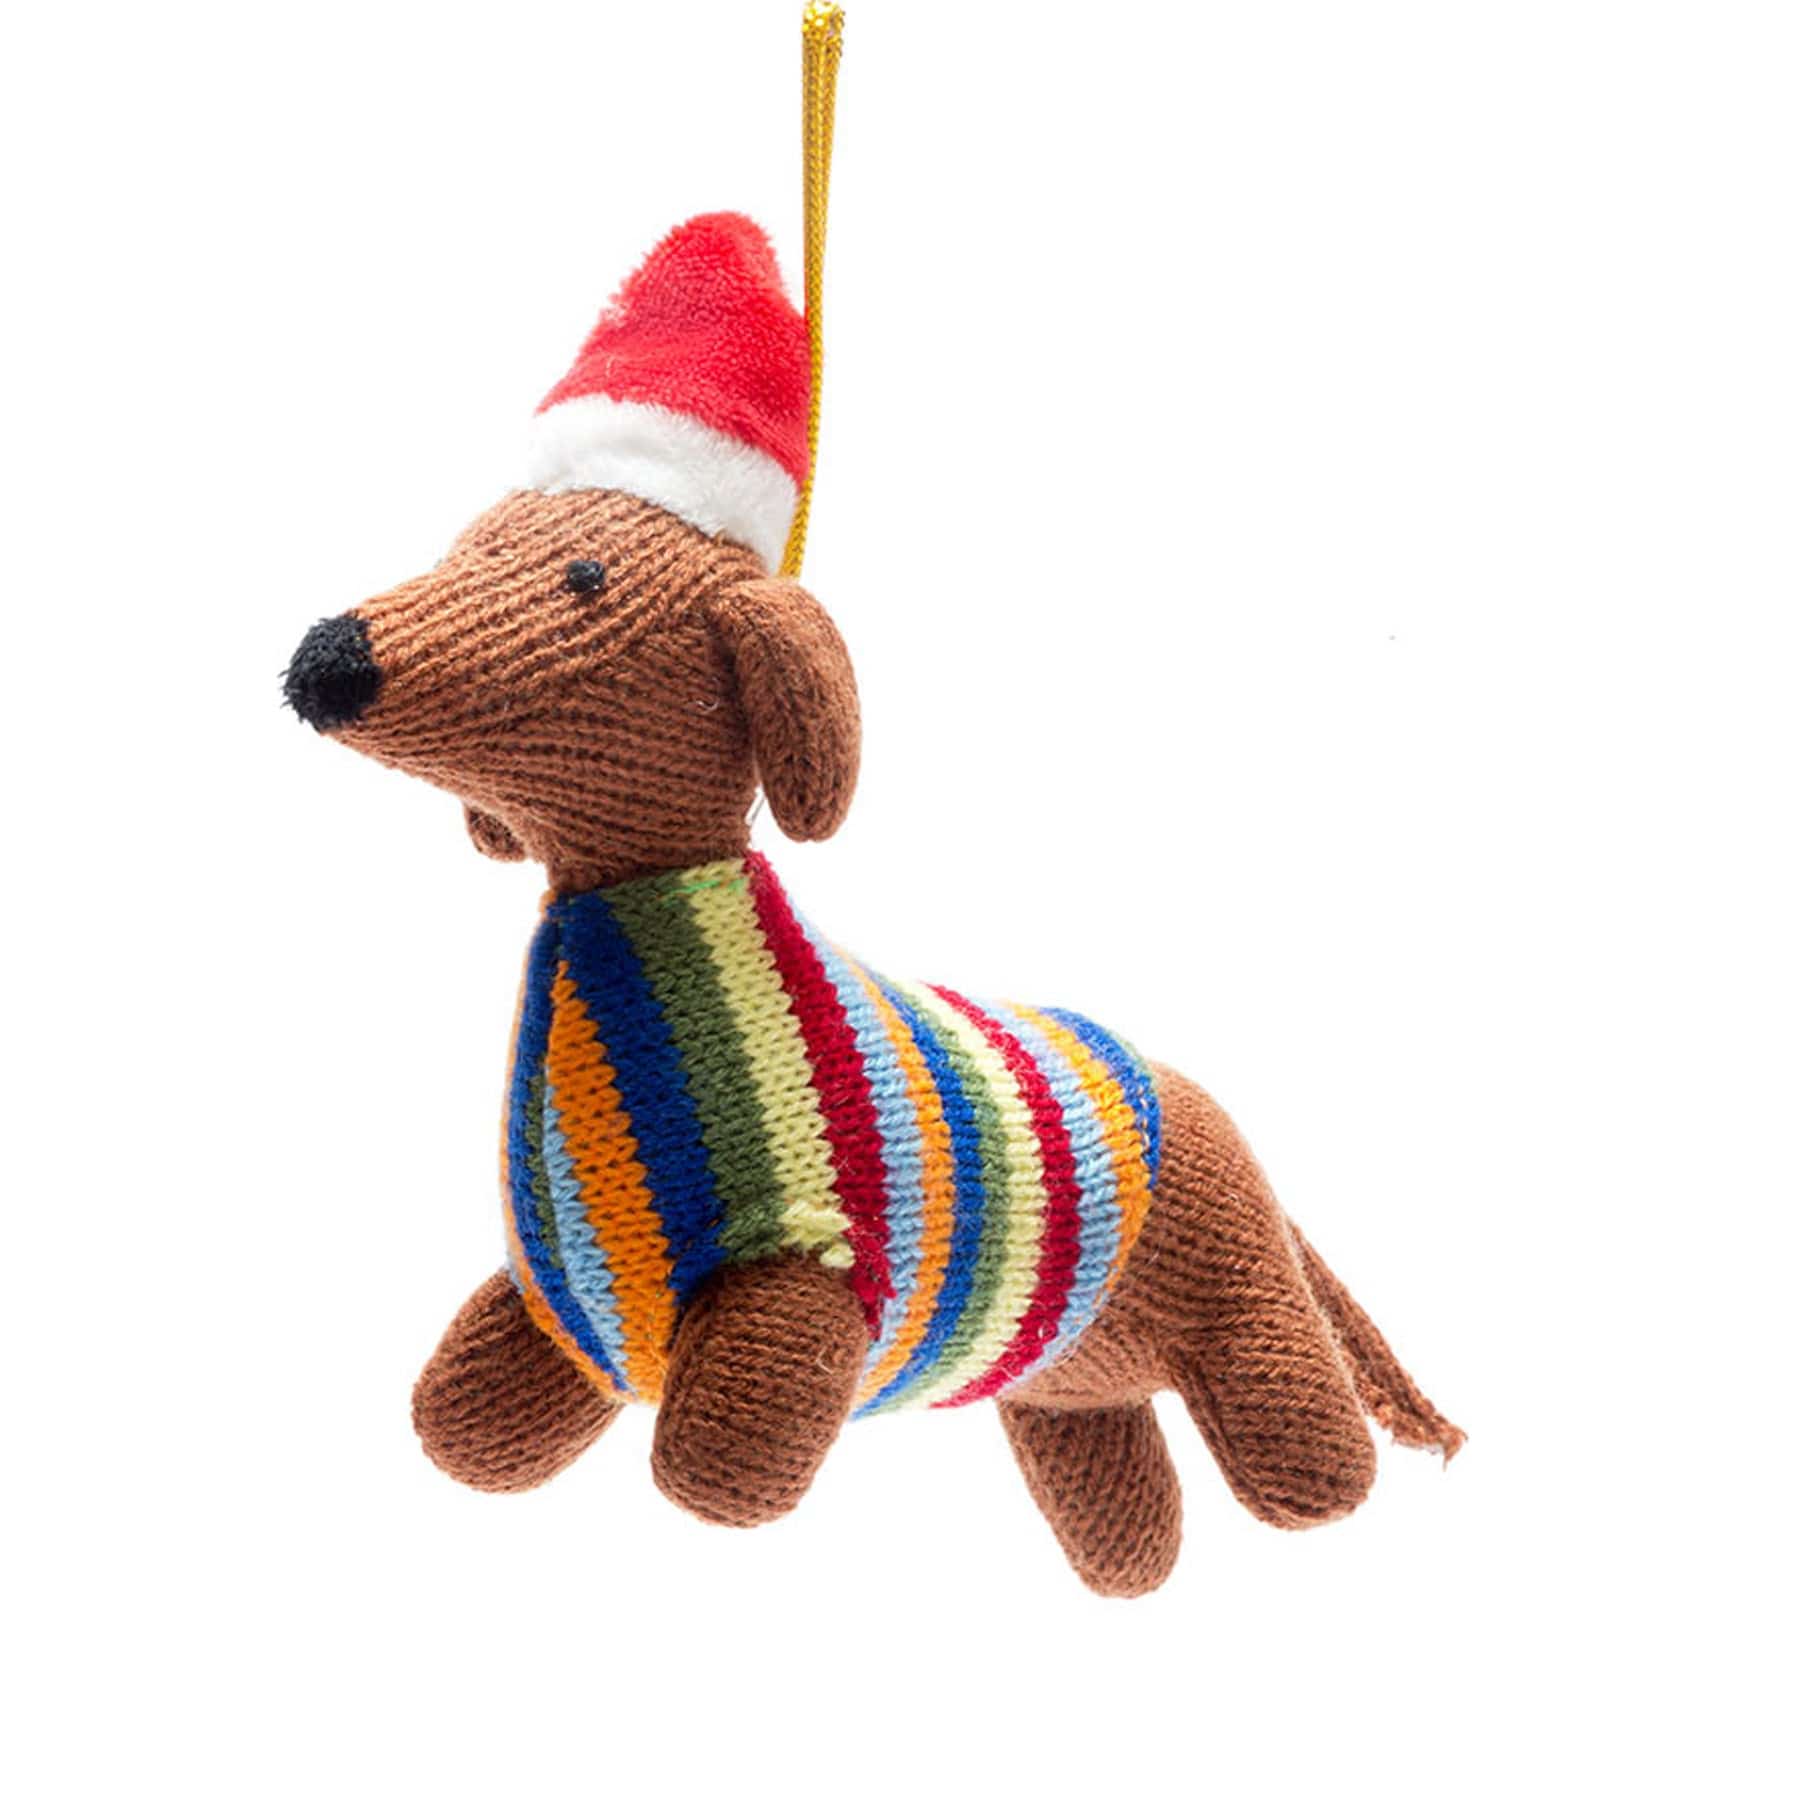 Knitted bright jumper sausage dog hanging dec